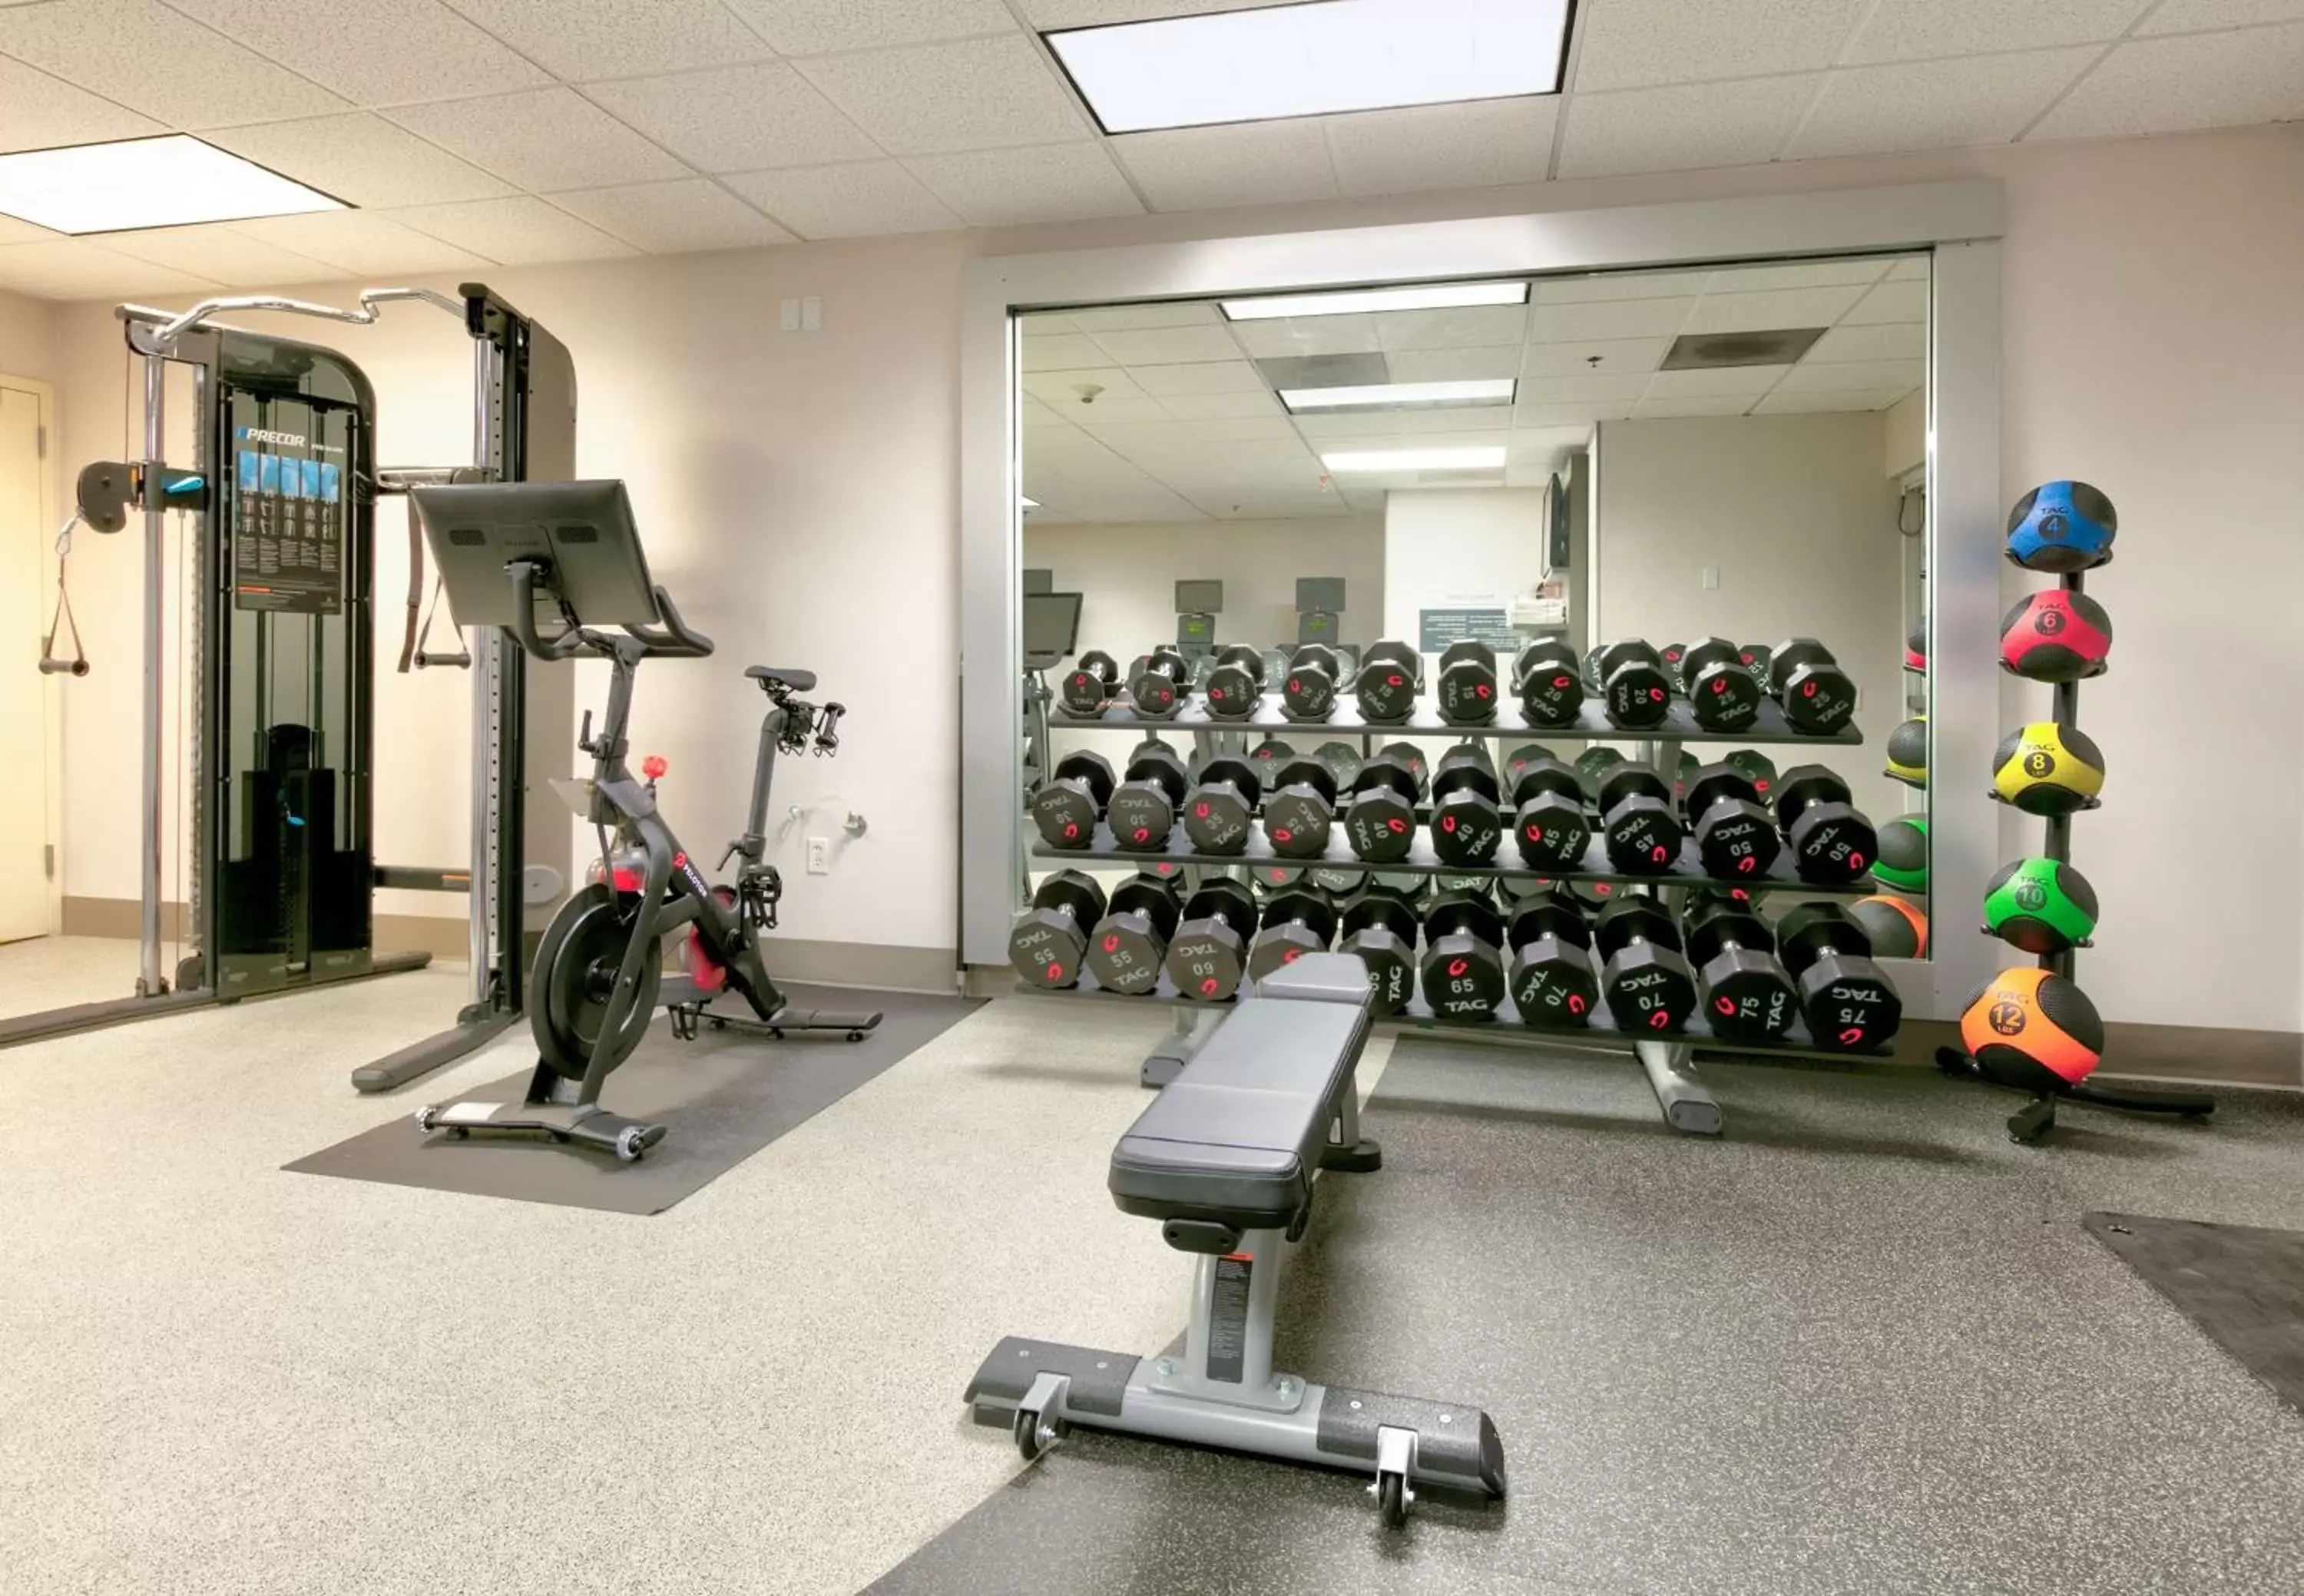 Fitness centre/facilities, Fitness Center/Facilities in Hilton Garden Inn Irvine East/Lake Forest